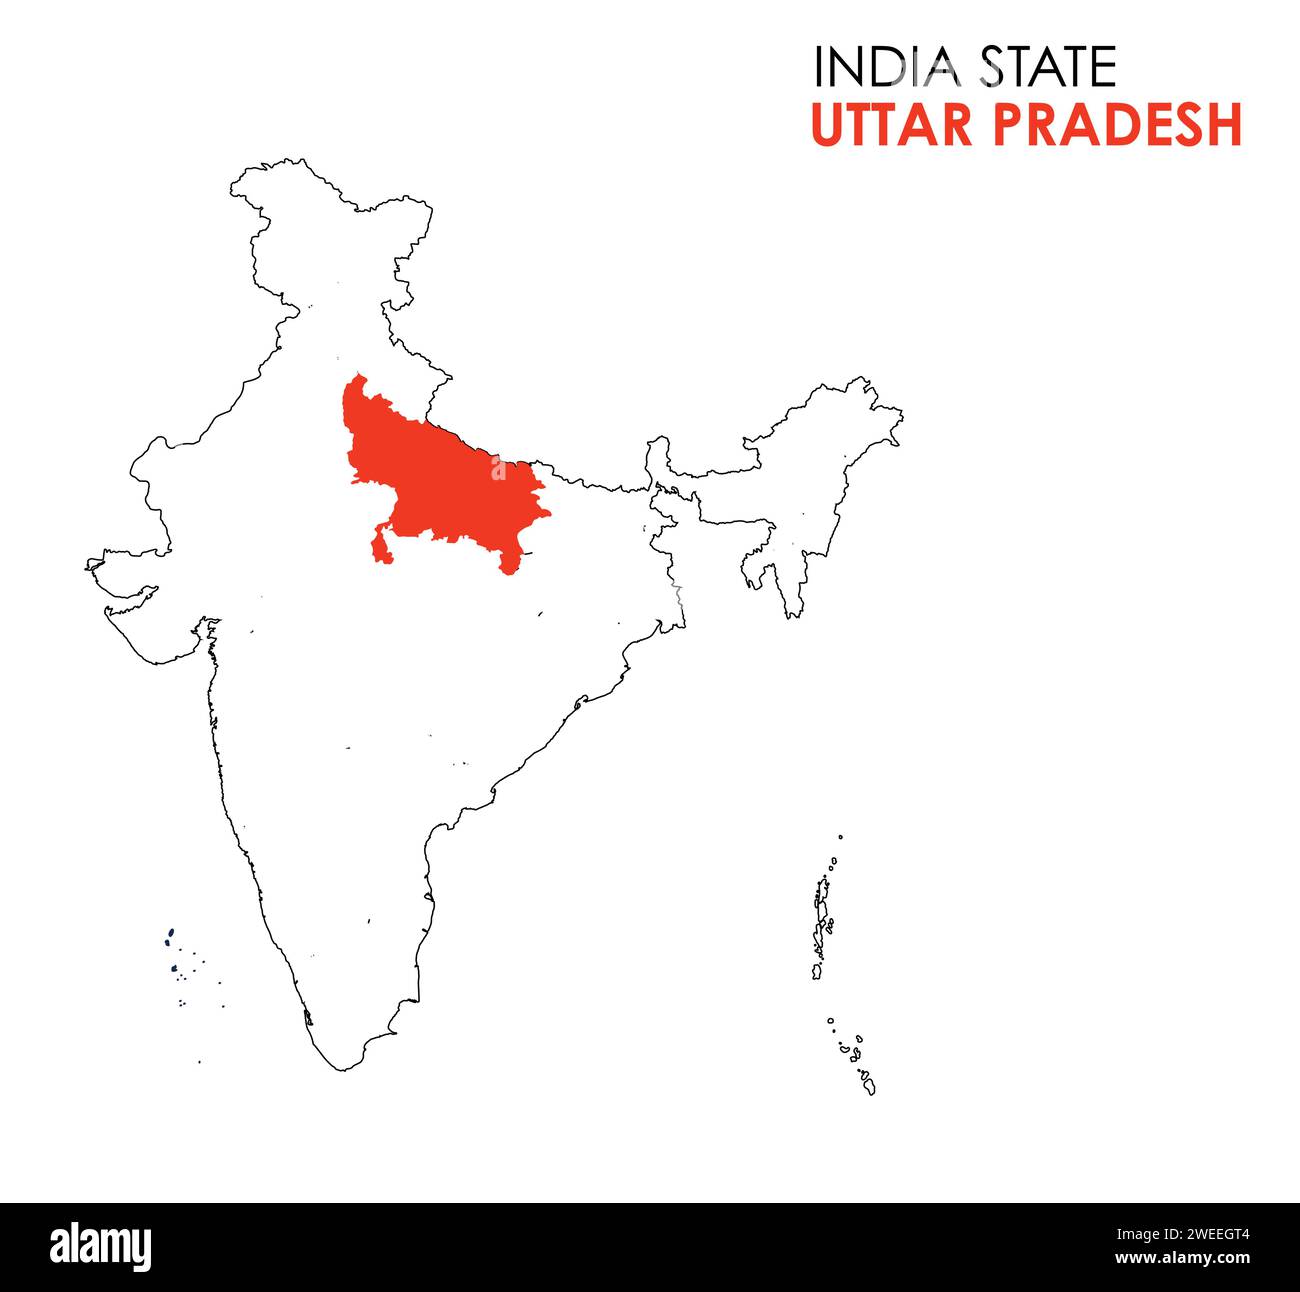 Carte de l'état indien de l'Uttar Pradesh. Illustration vectorielle de carte Uttar Pradesh. Fond blanc. Illustration de Vecteur